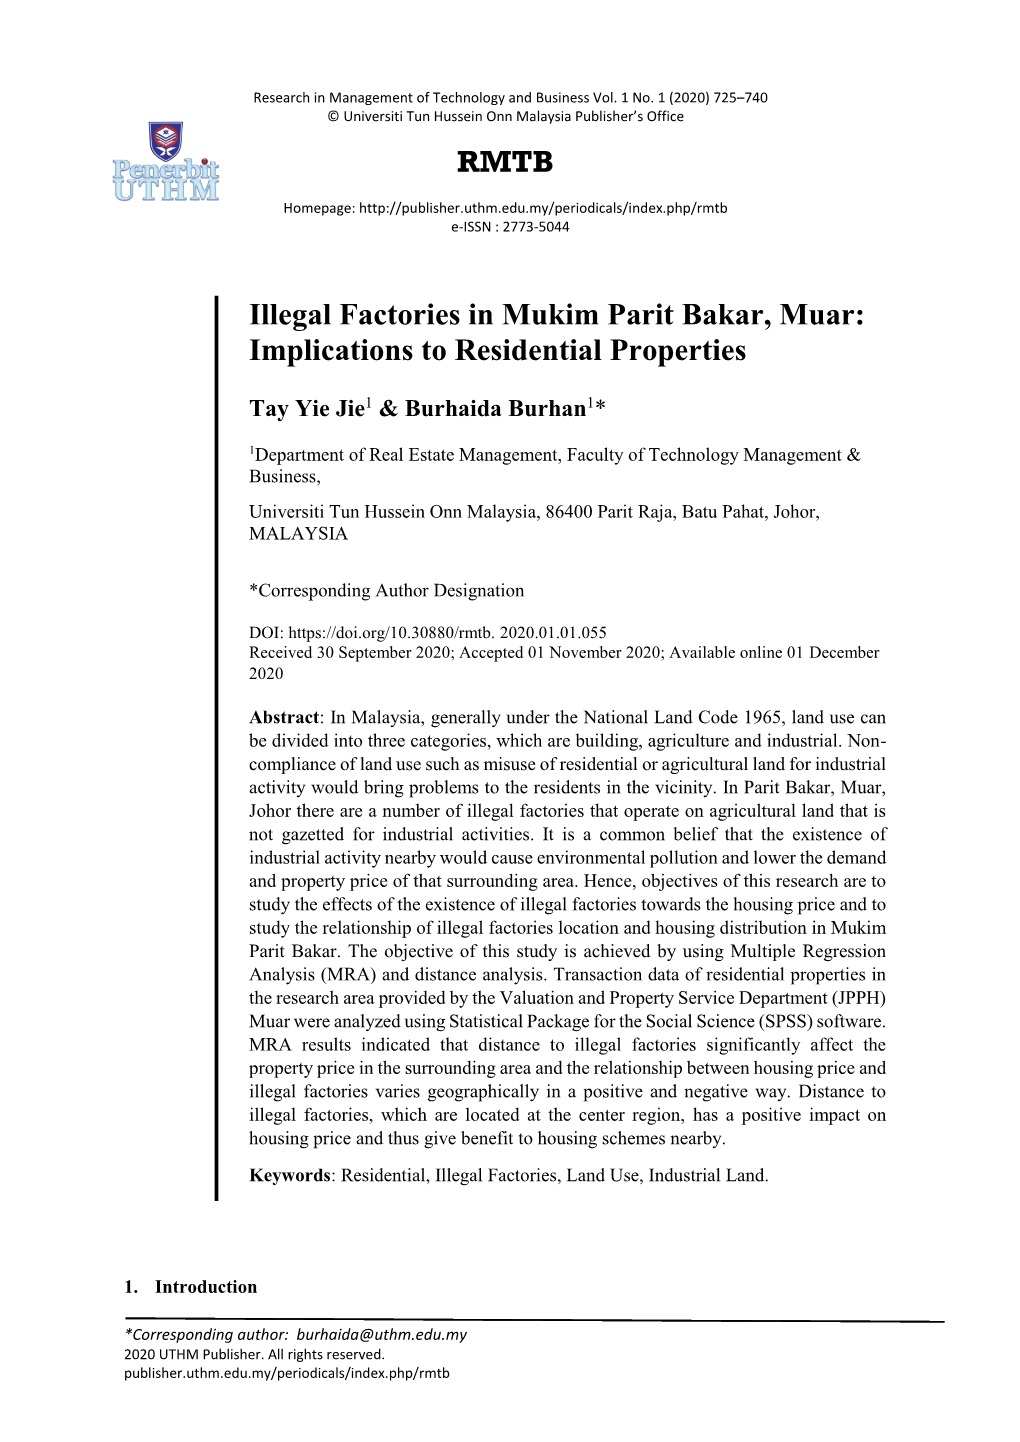 RMTB Illegal Factories in Mukim Parit Bakar, Muar: Implications To